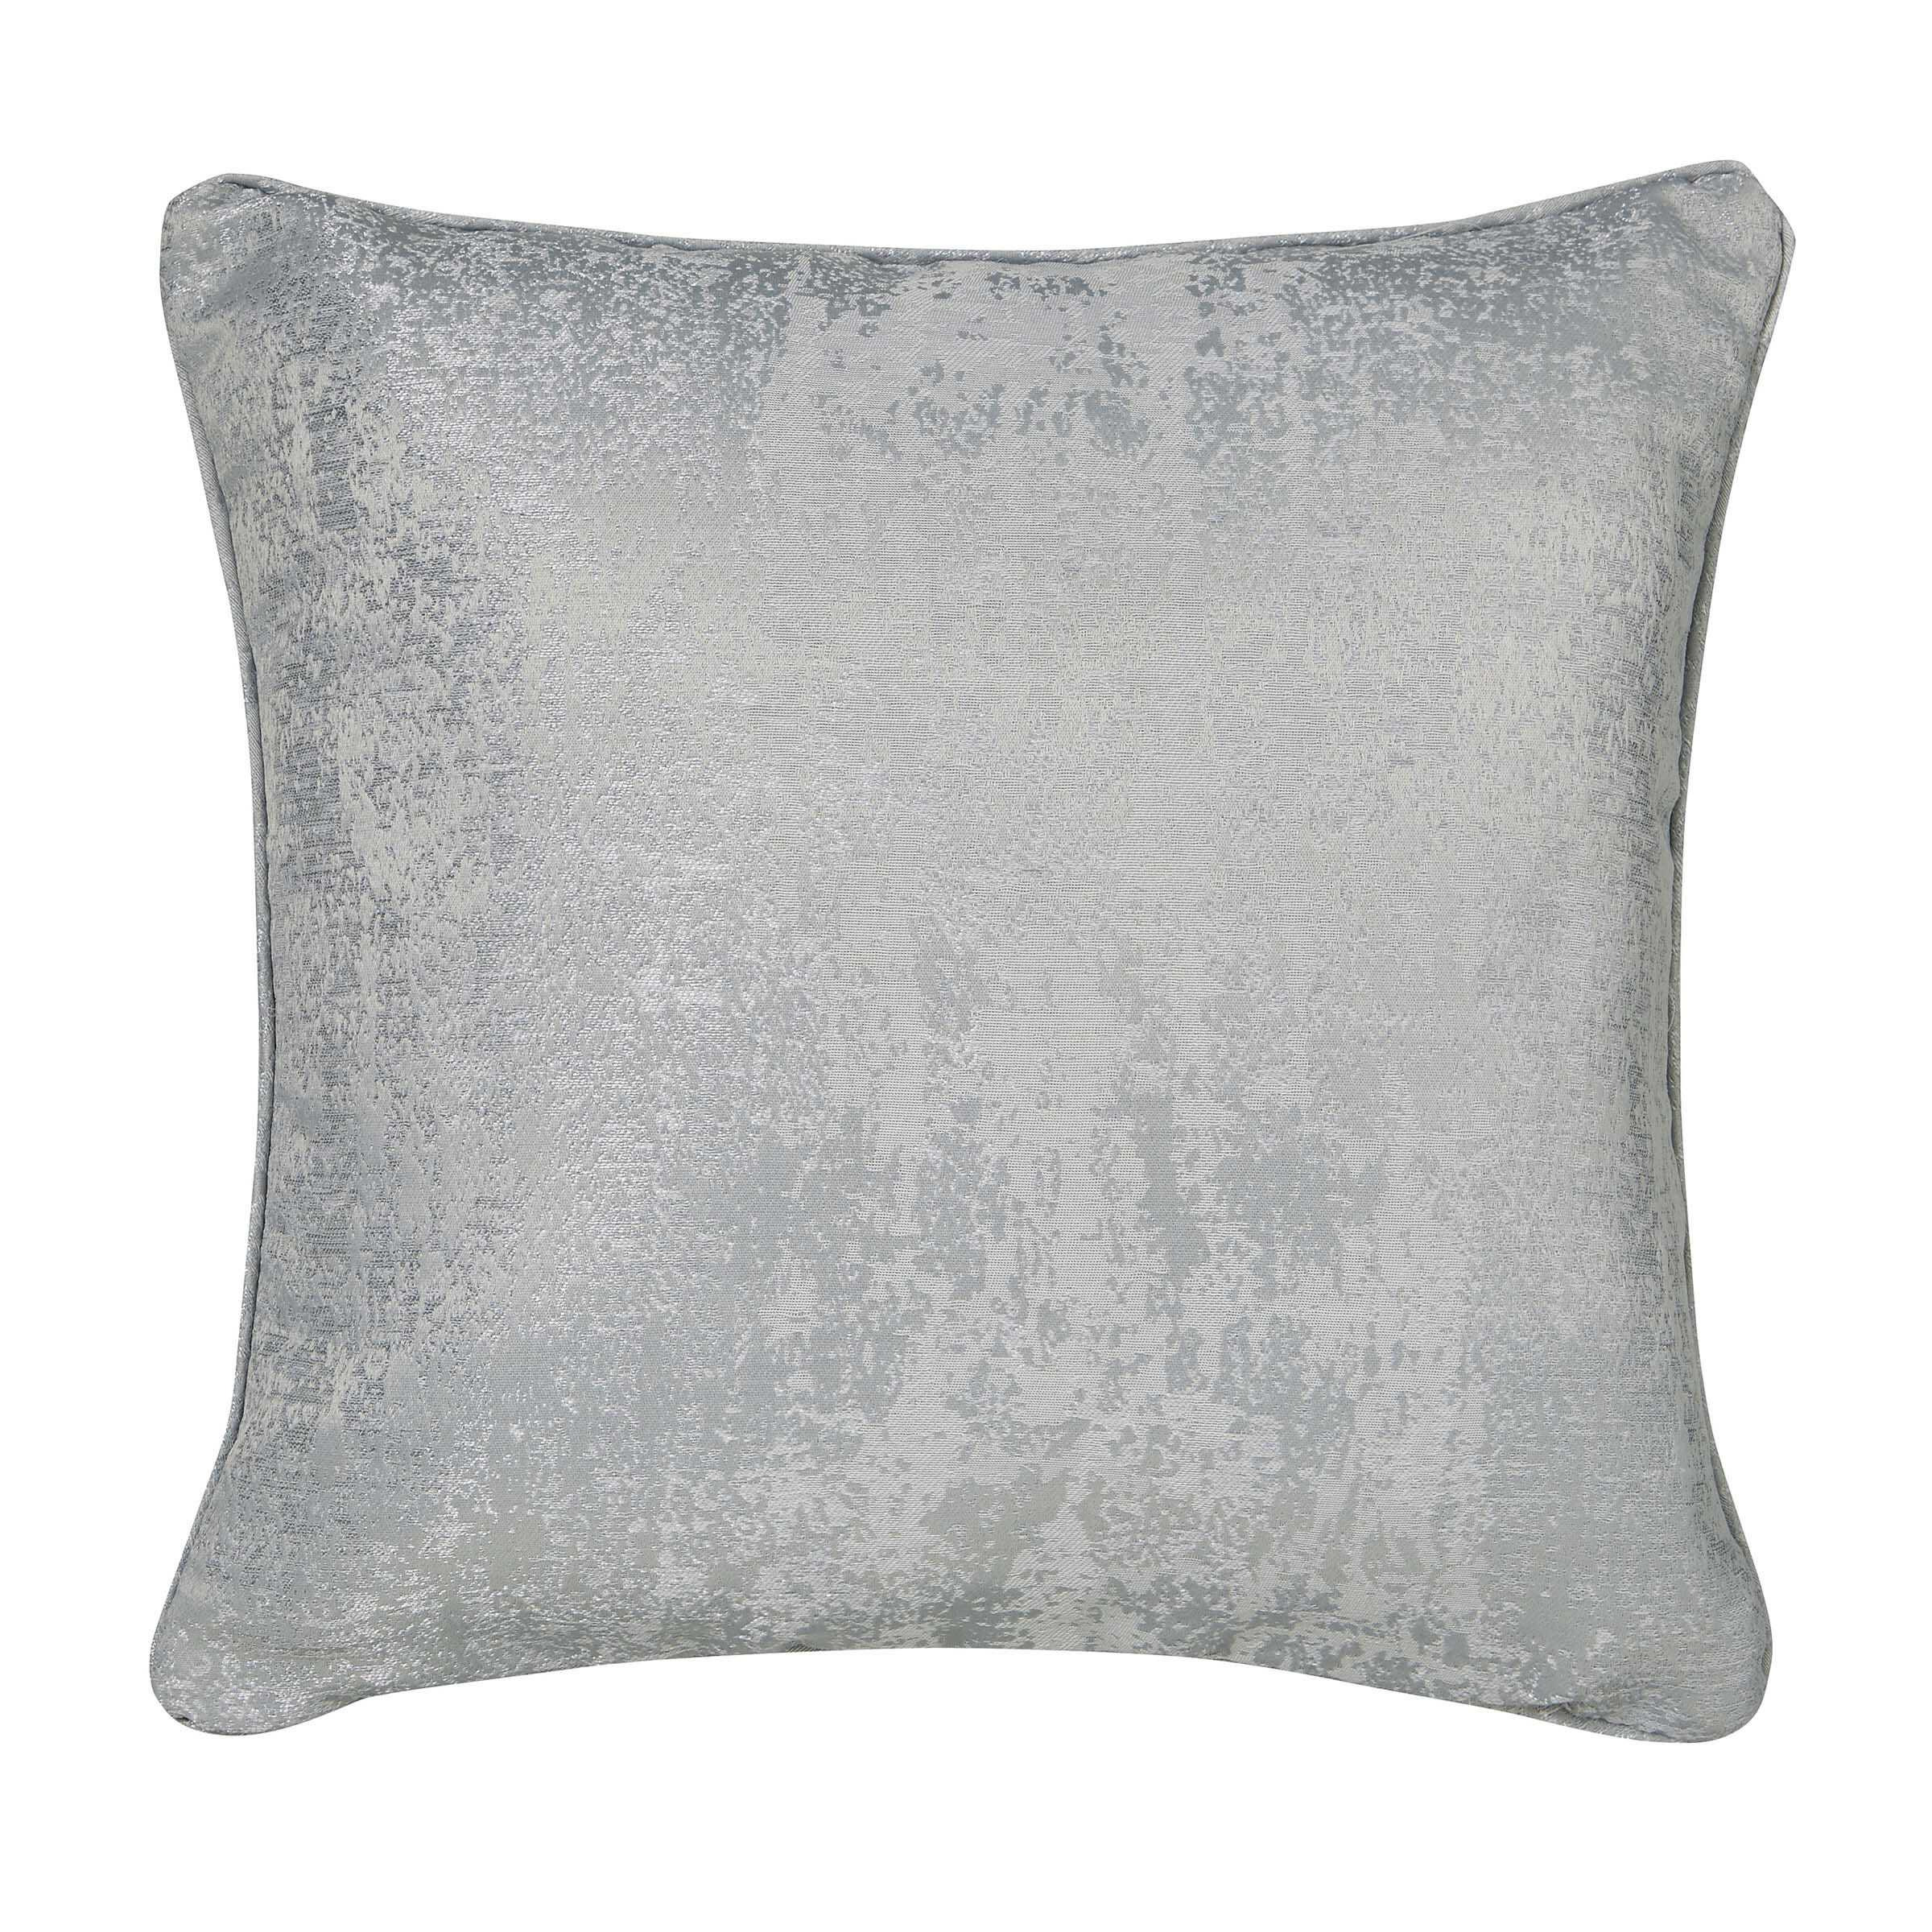 Helena Springfield Roma Cushion 45cm x 45cm, Silver - image 1